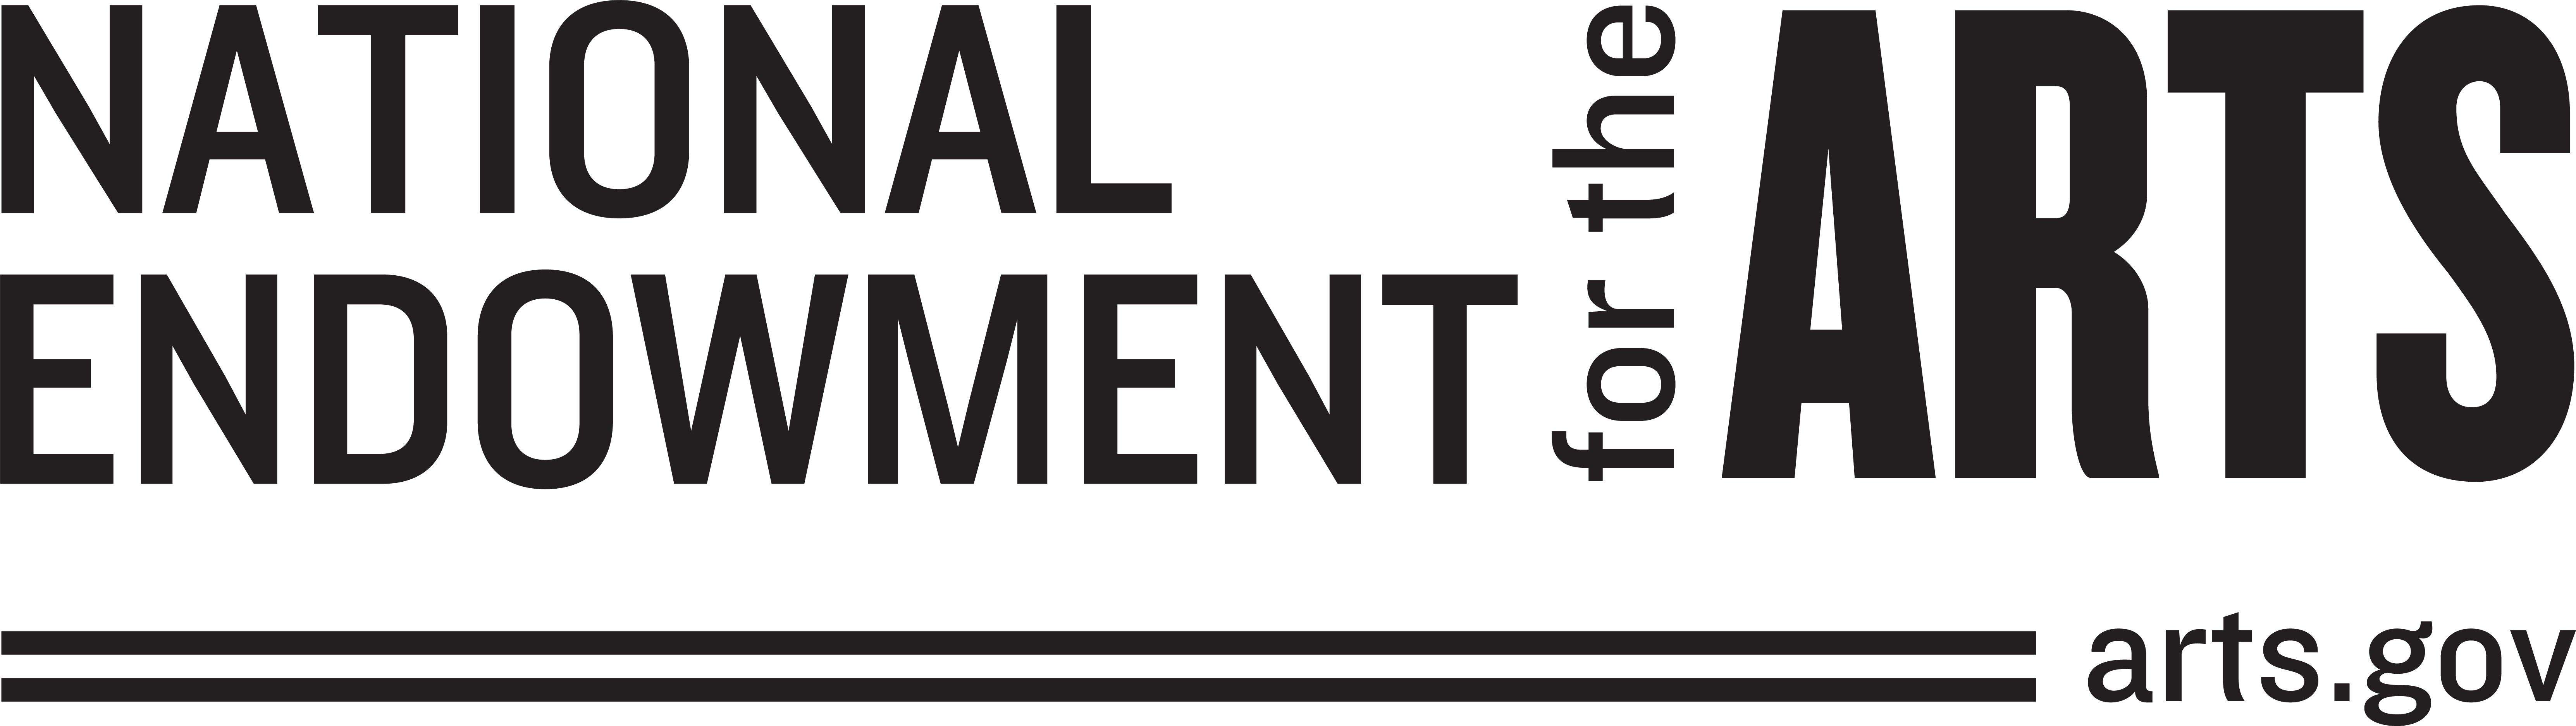 NEA Logo | National Endowment for the Arts